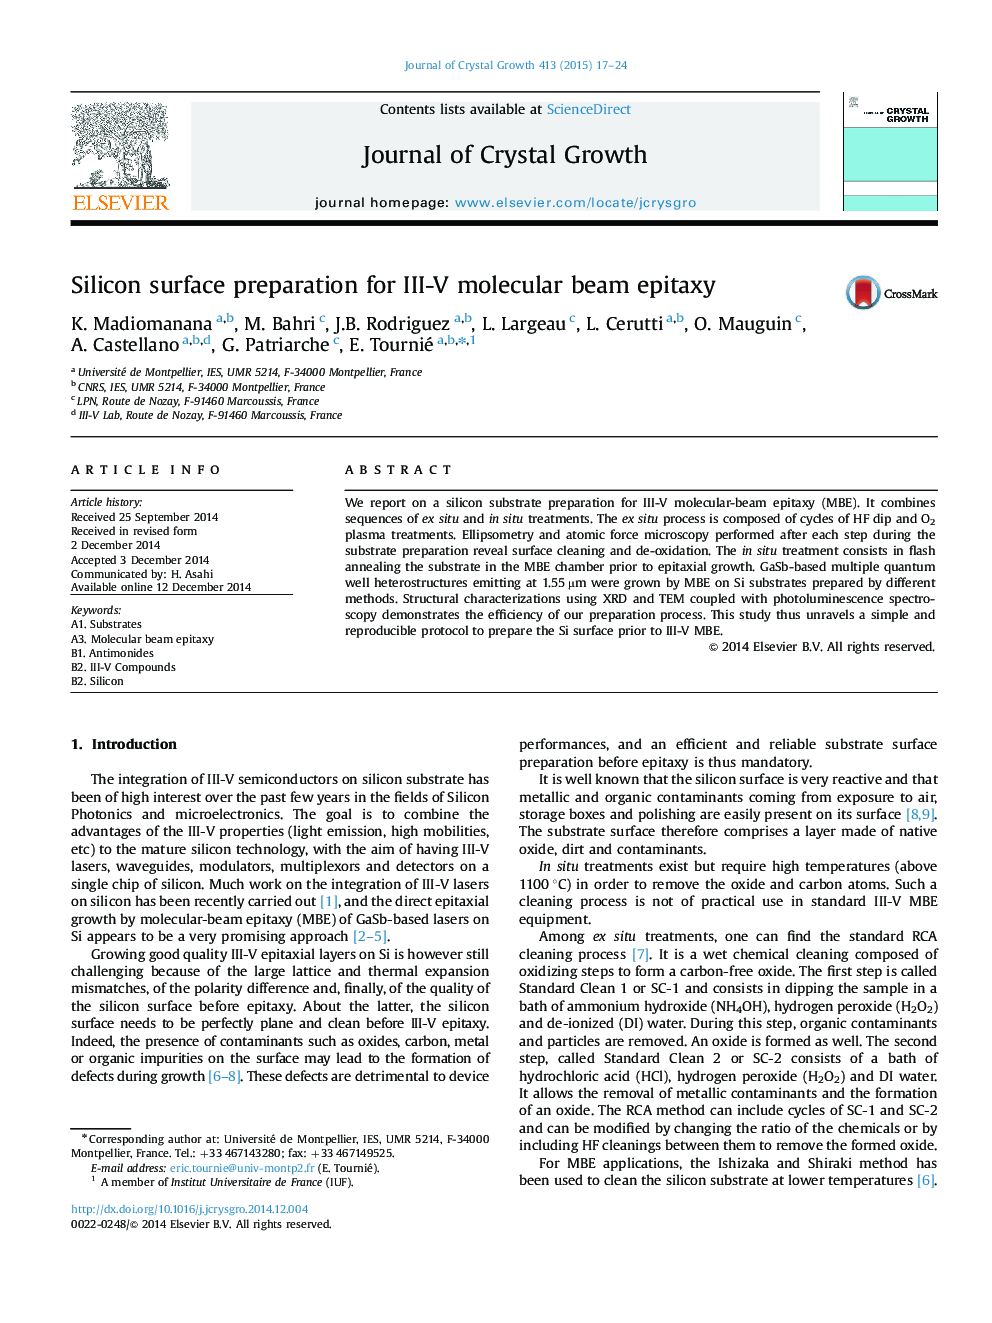 Silicon surface preparation for III-V molecular beam epitaxy